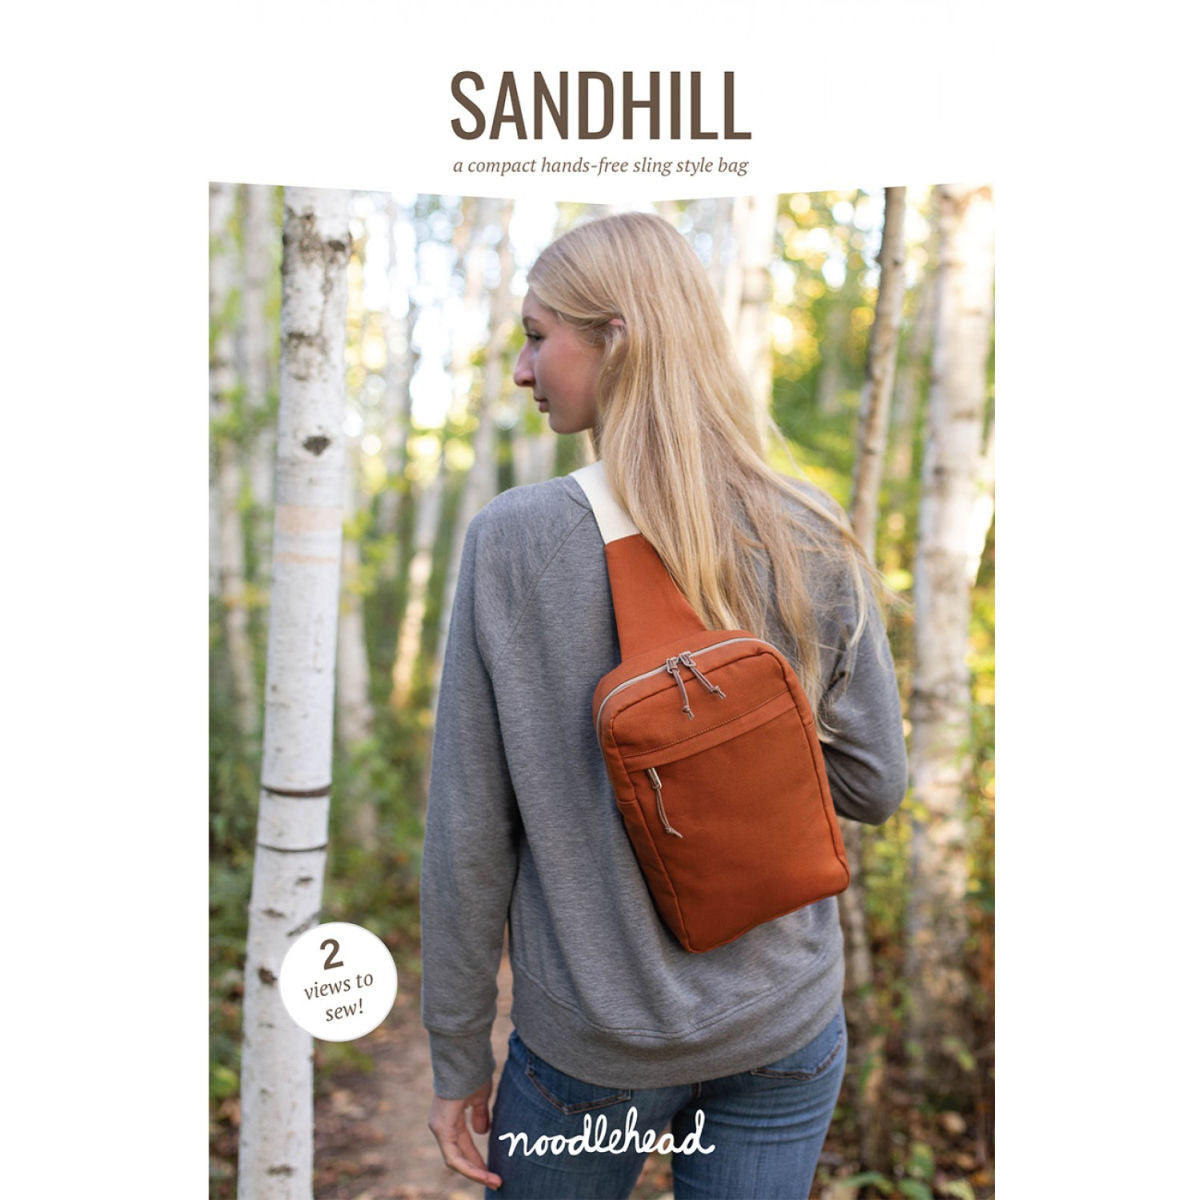 Sandhill Sling sewing pattern